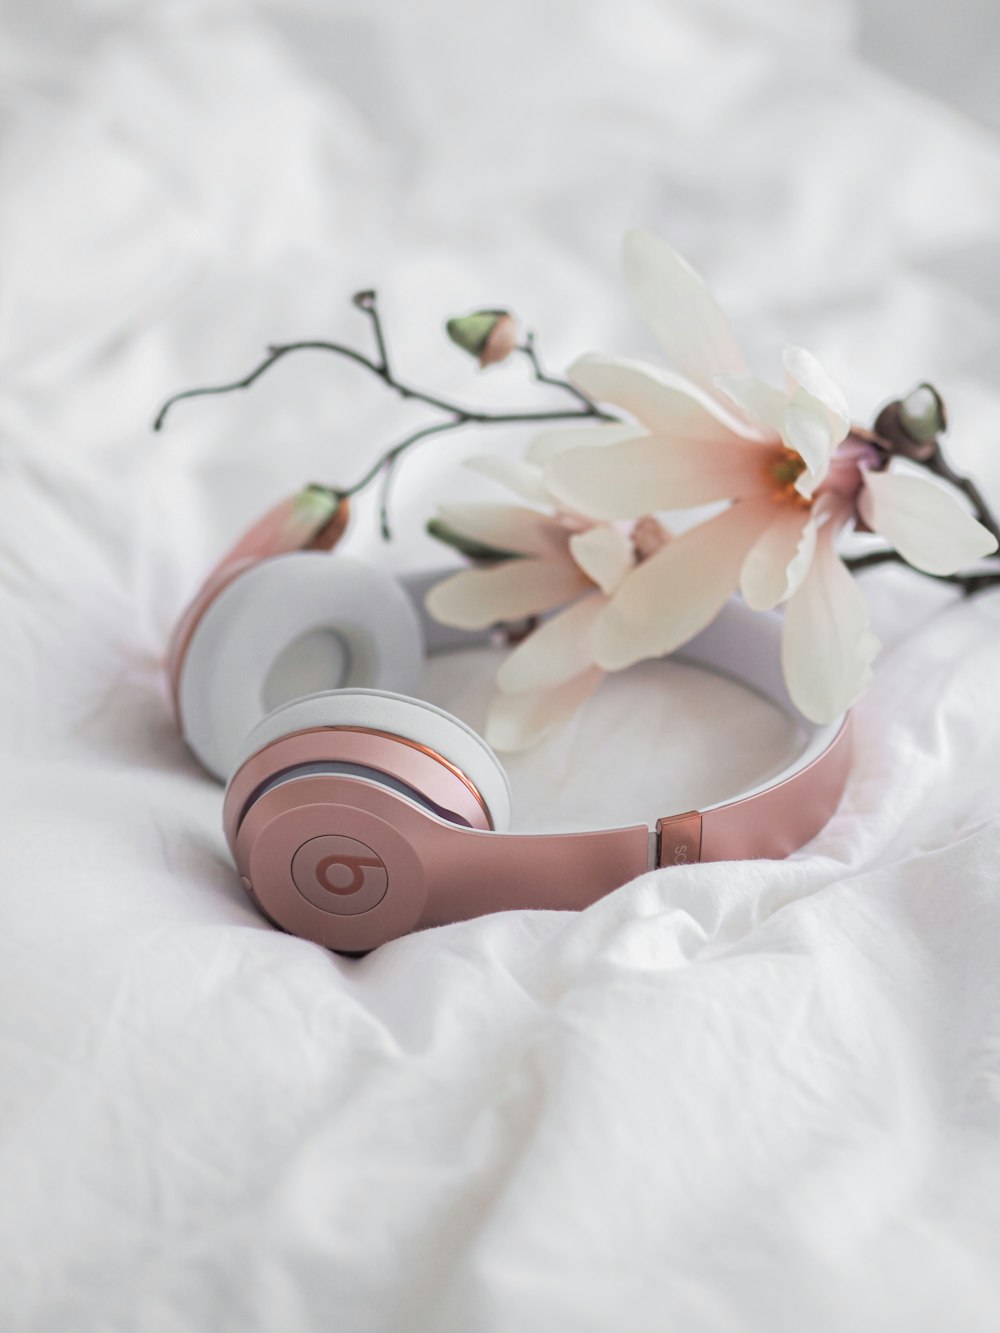 Cuffie Pink Beats by Dr Dre su tessuto bianco